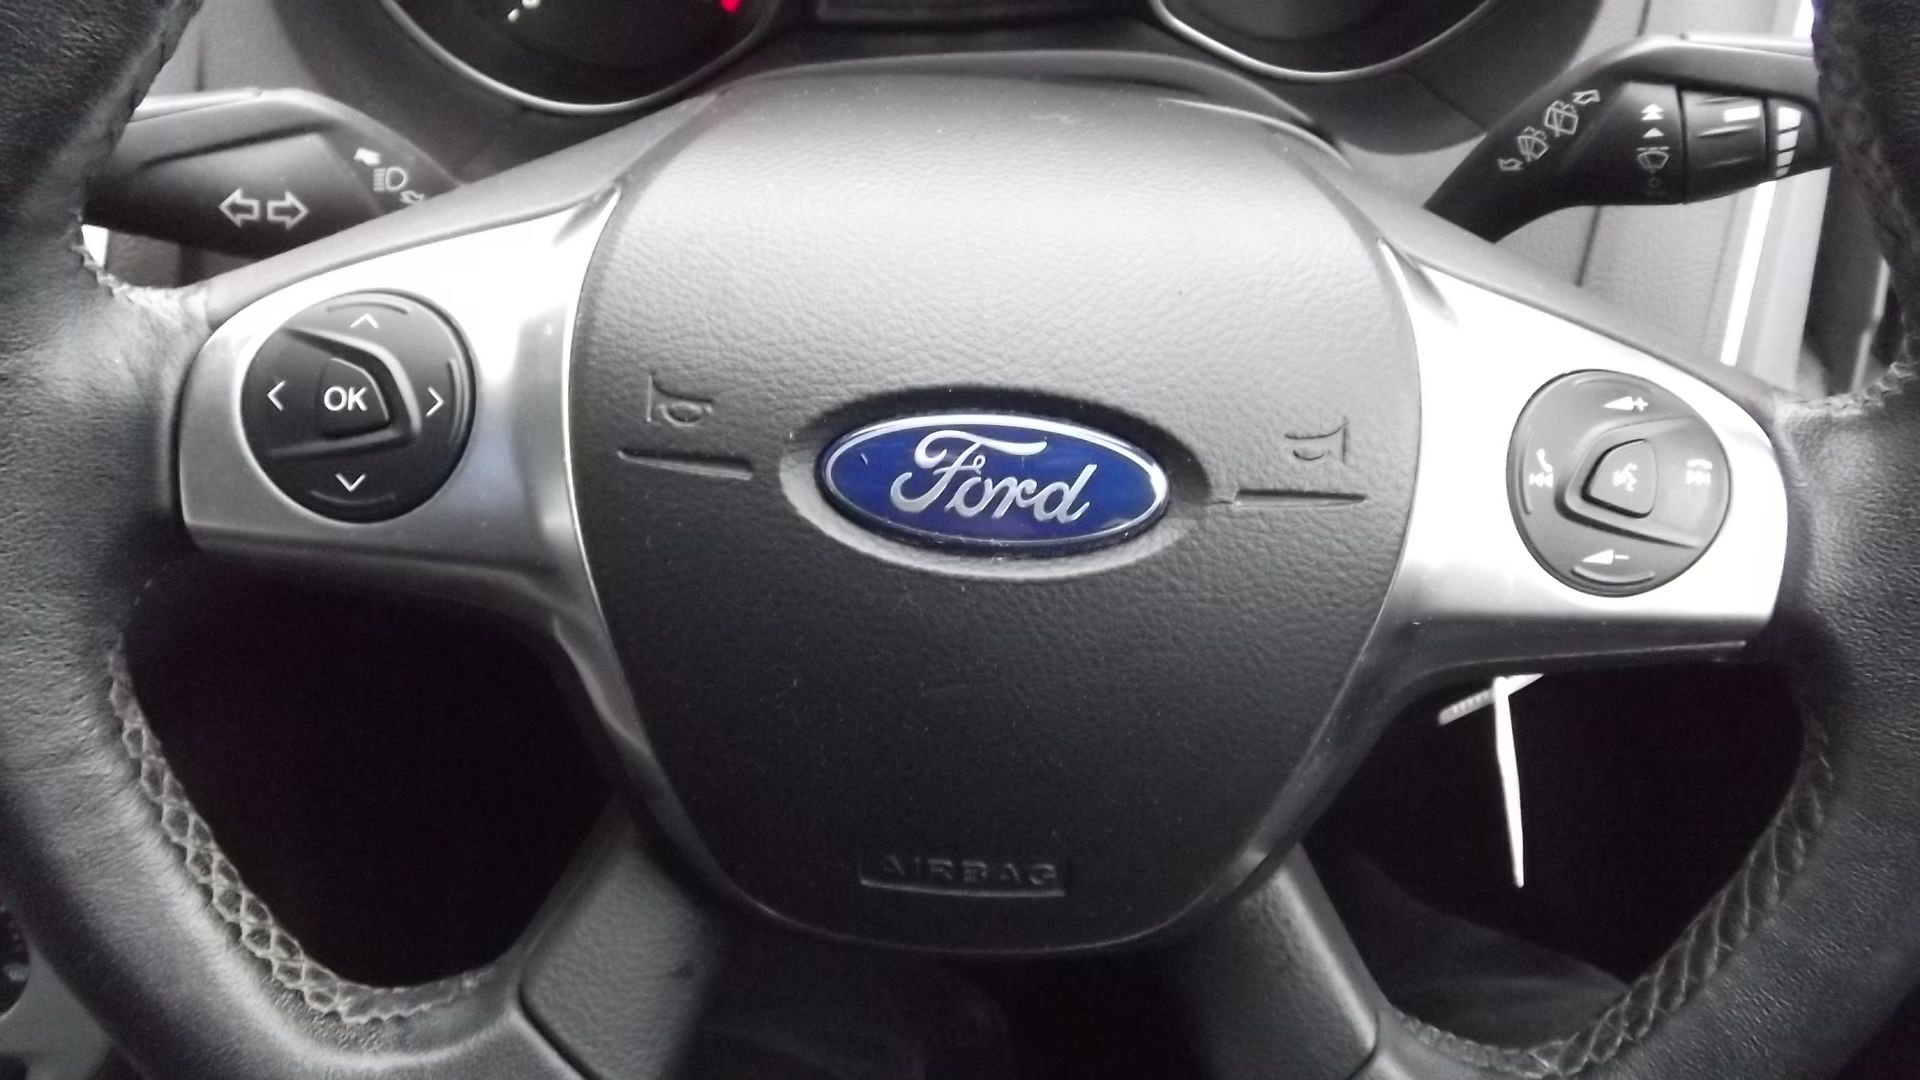 2013 Ford Focus 1.6 TDCi 115 Zetec 5dr Hatchback - CL505 - NO VAT ON THE HAMMER - Location: Corby, N - Image 9 of 21